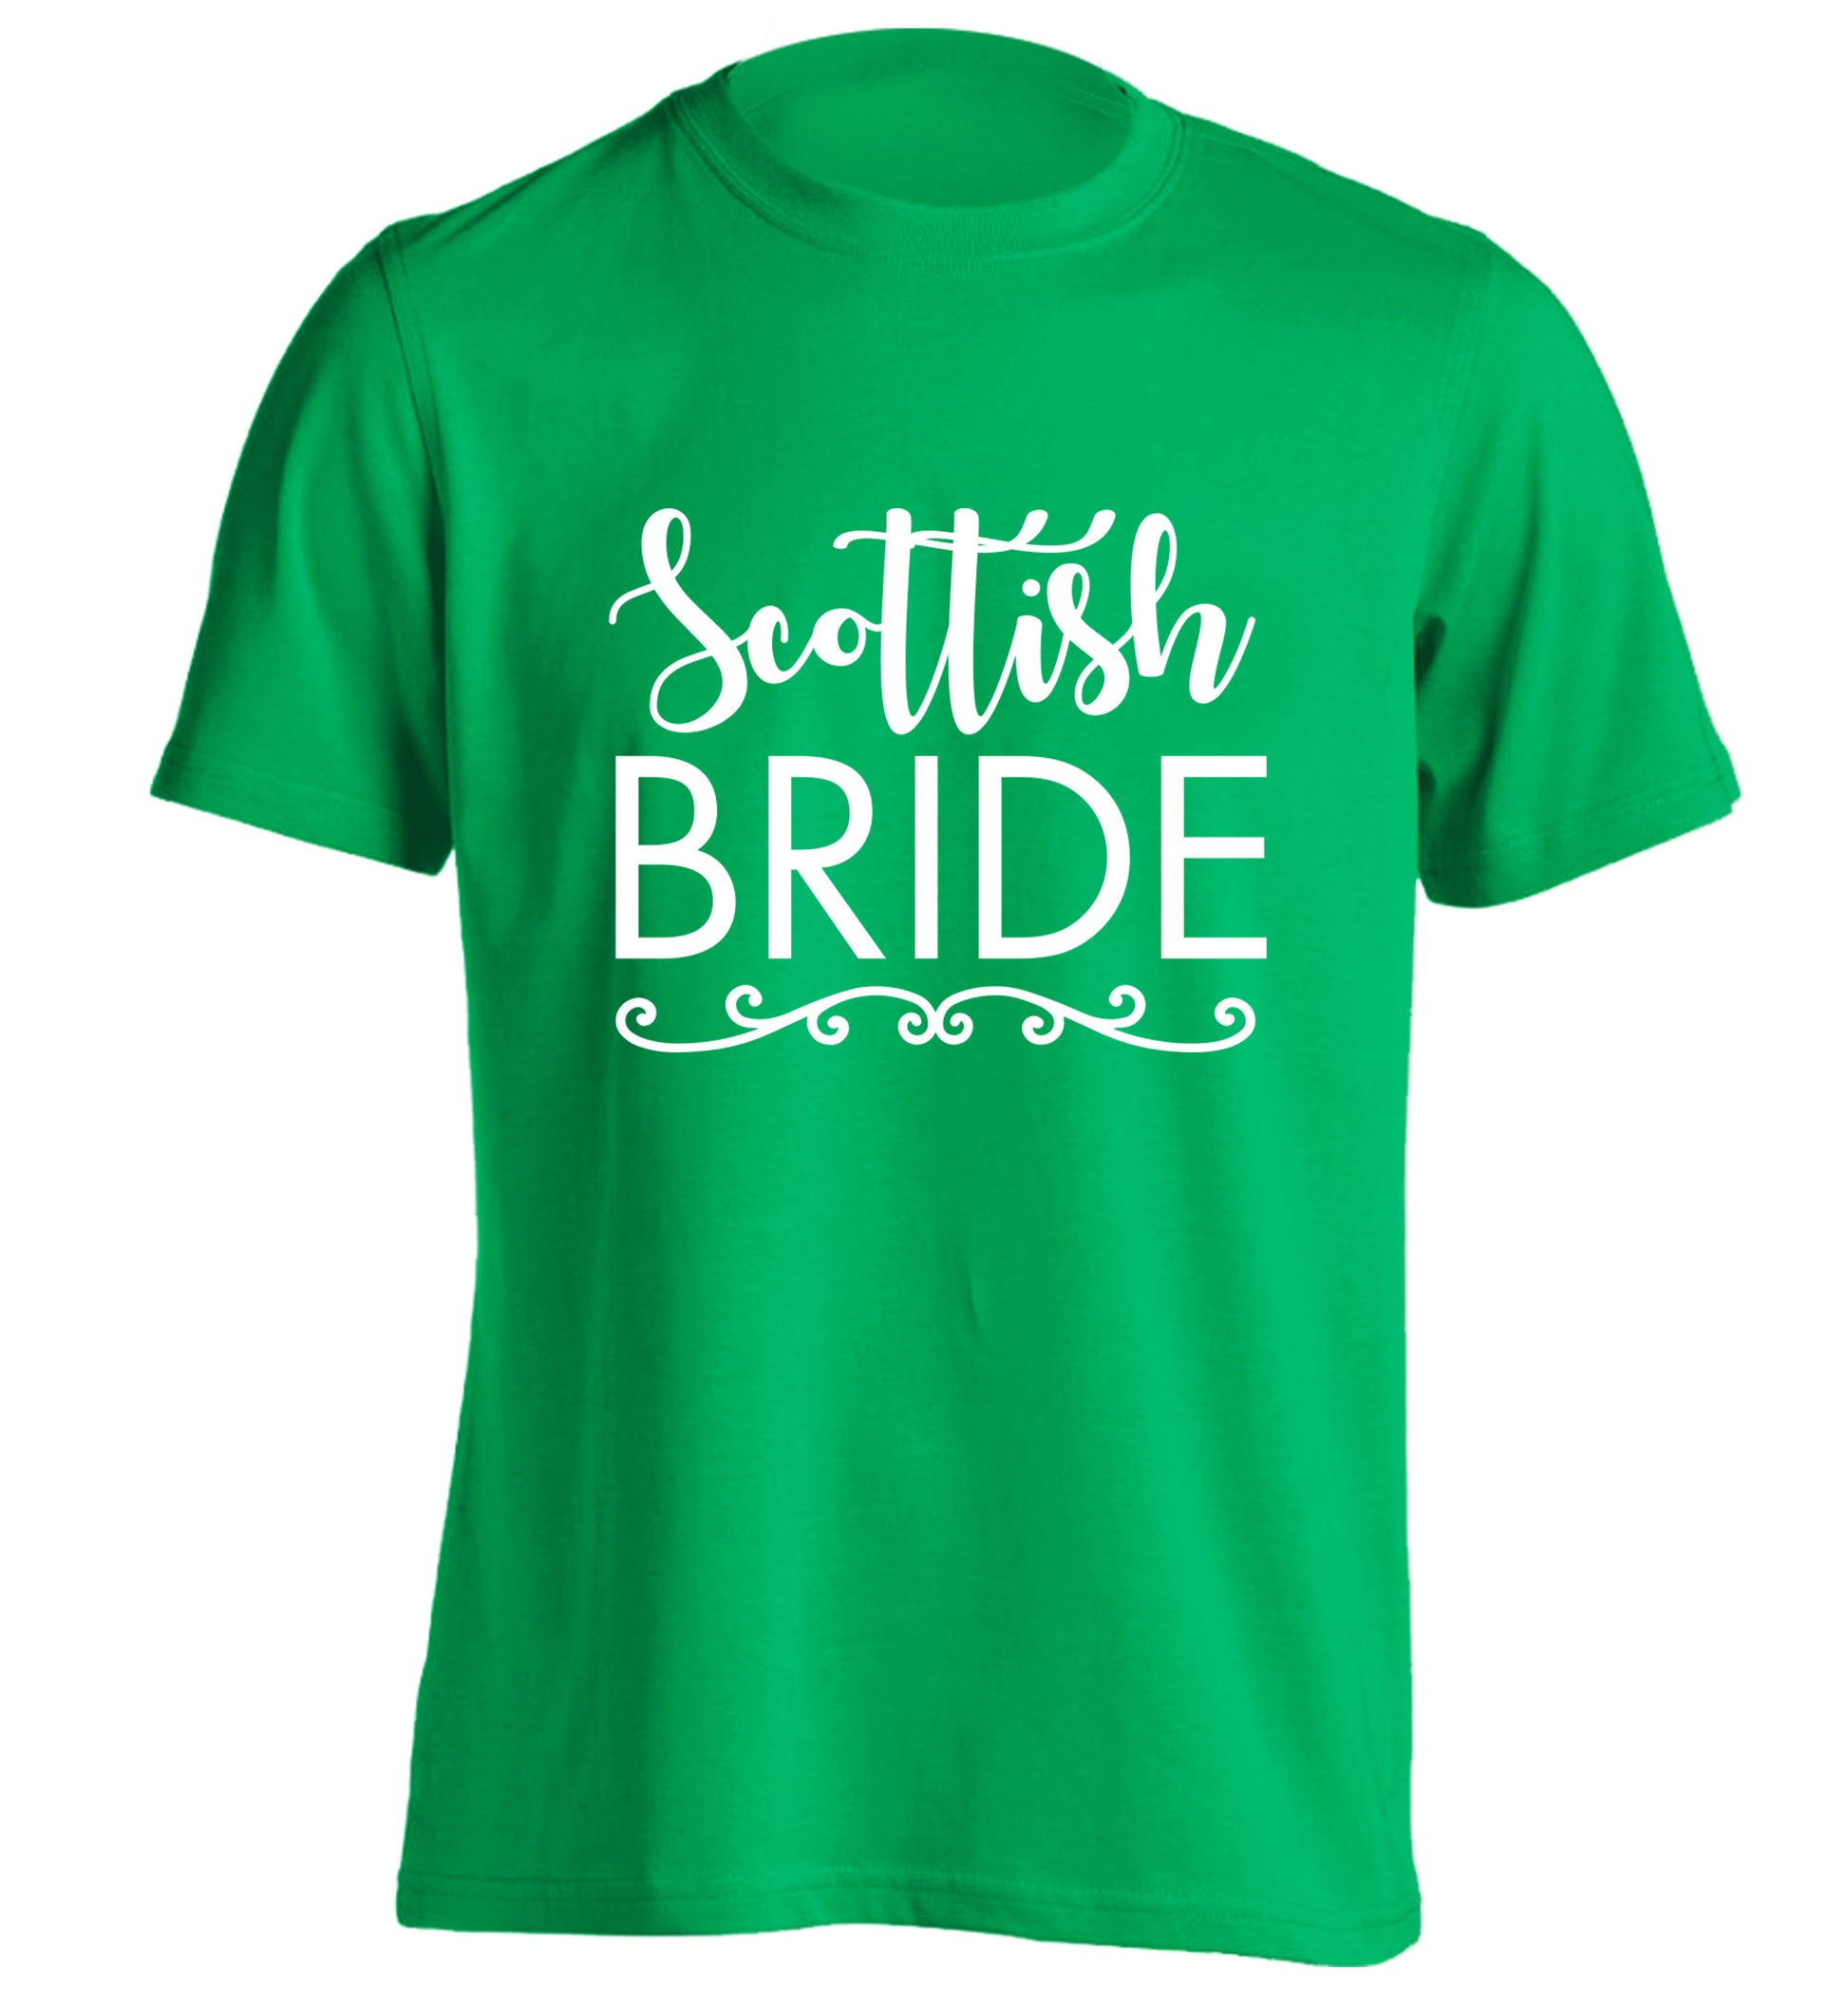 Scottish Bride adults unisex green Tshirt 2XL